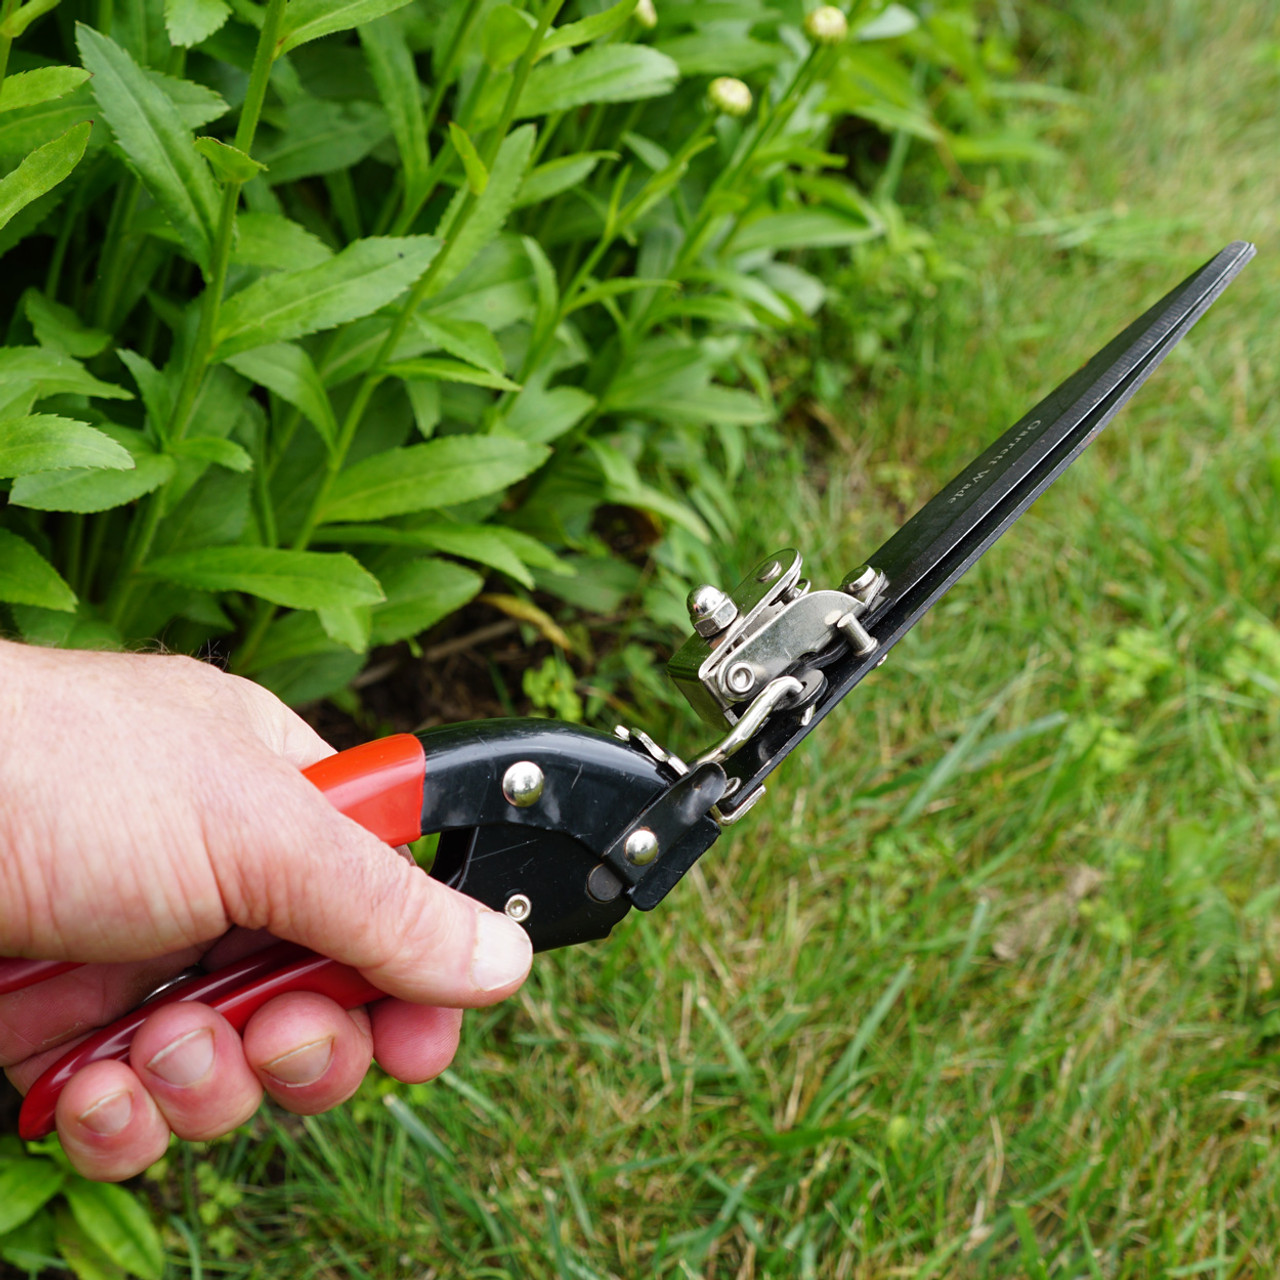 hedge trimmer scissors